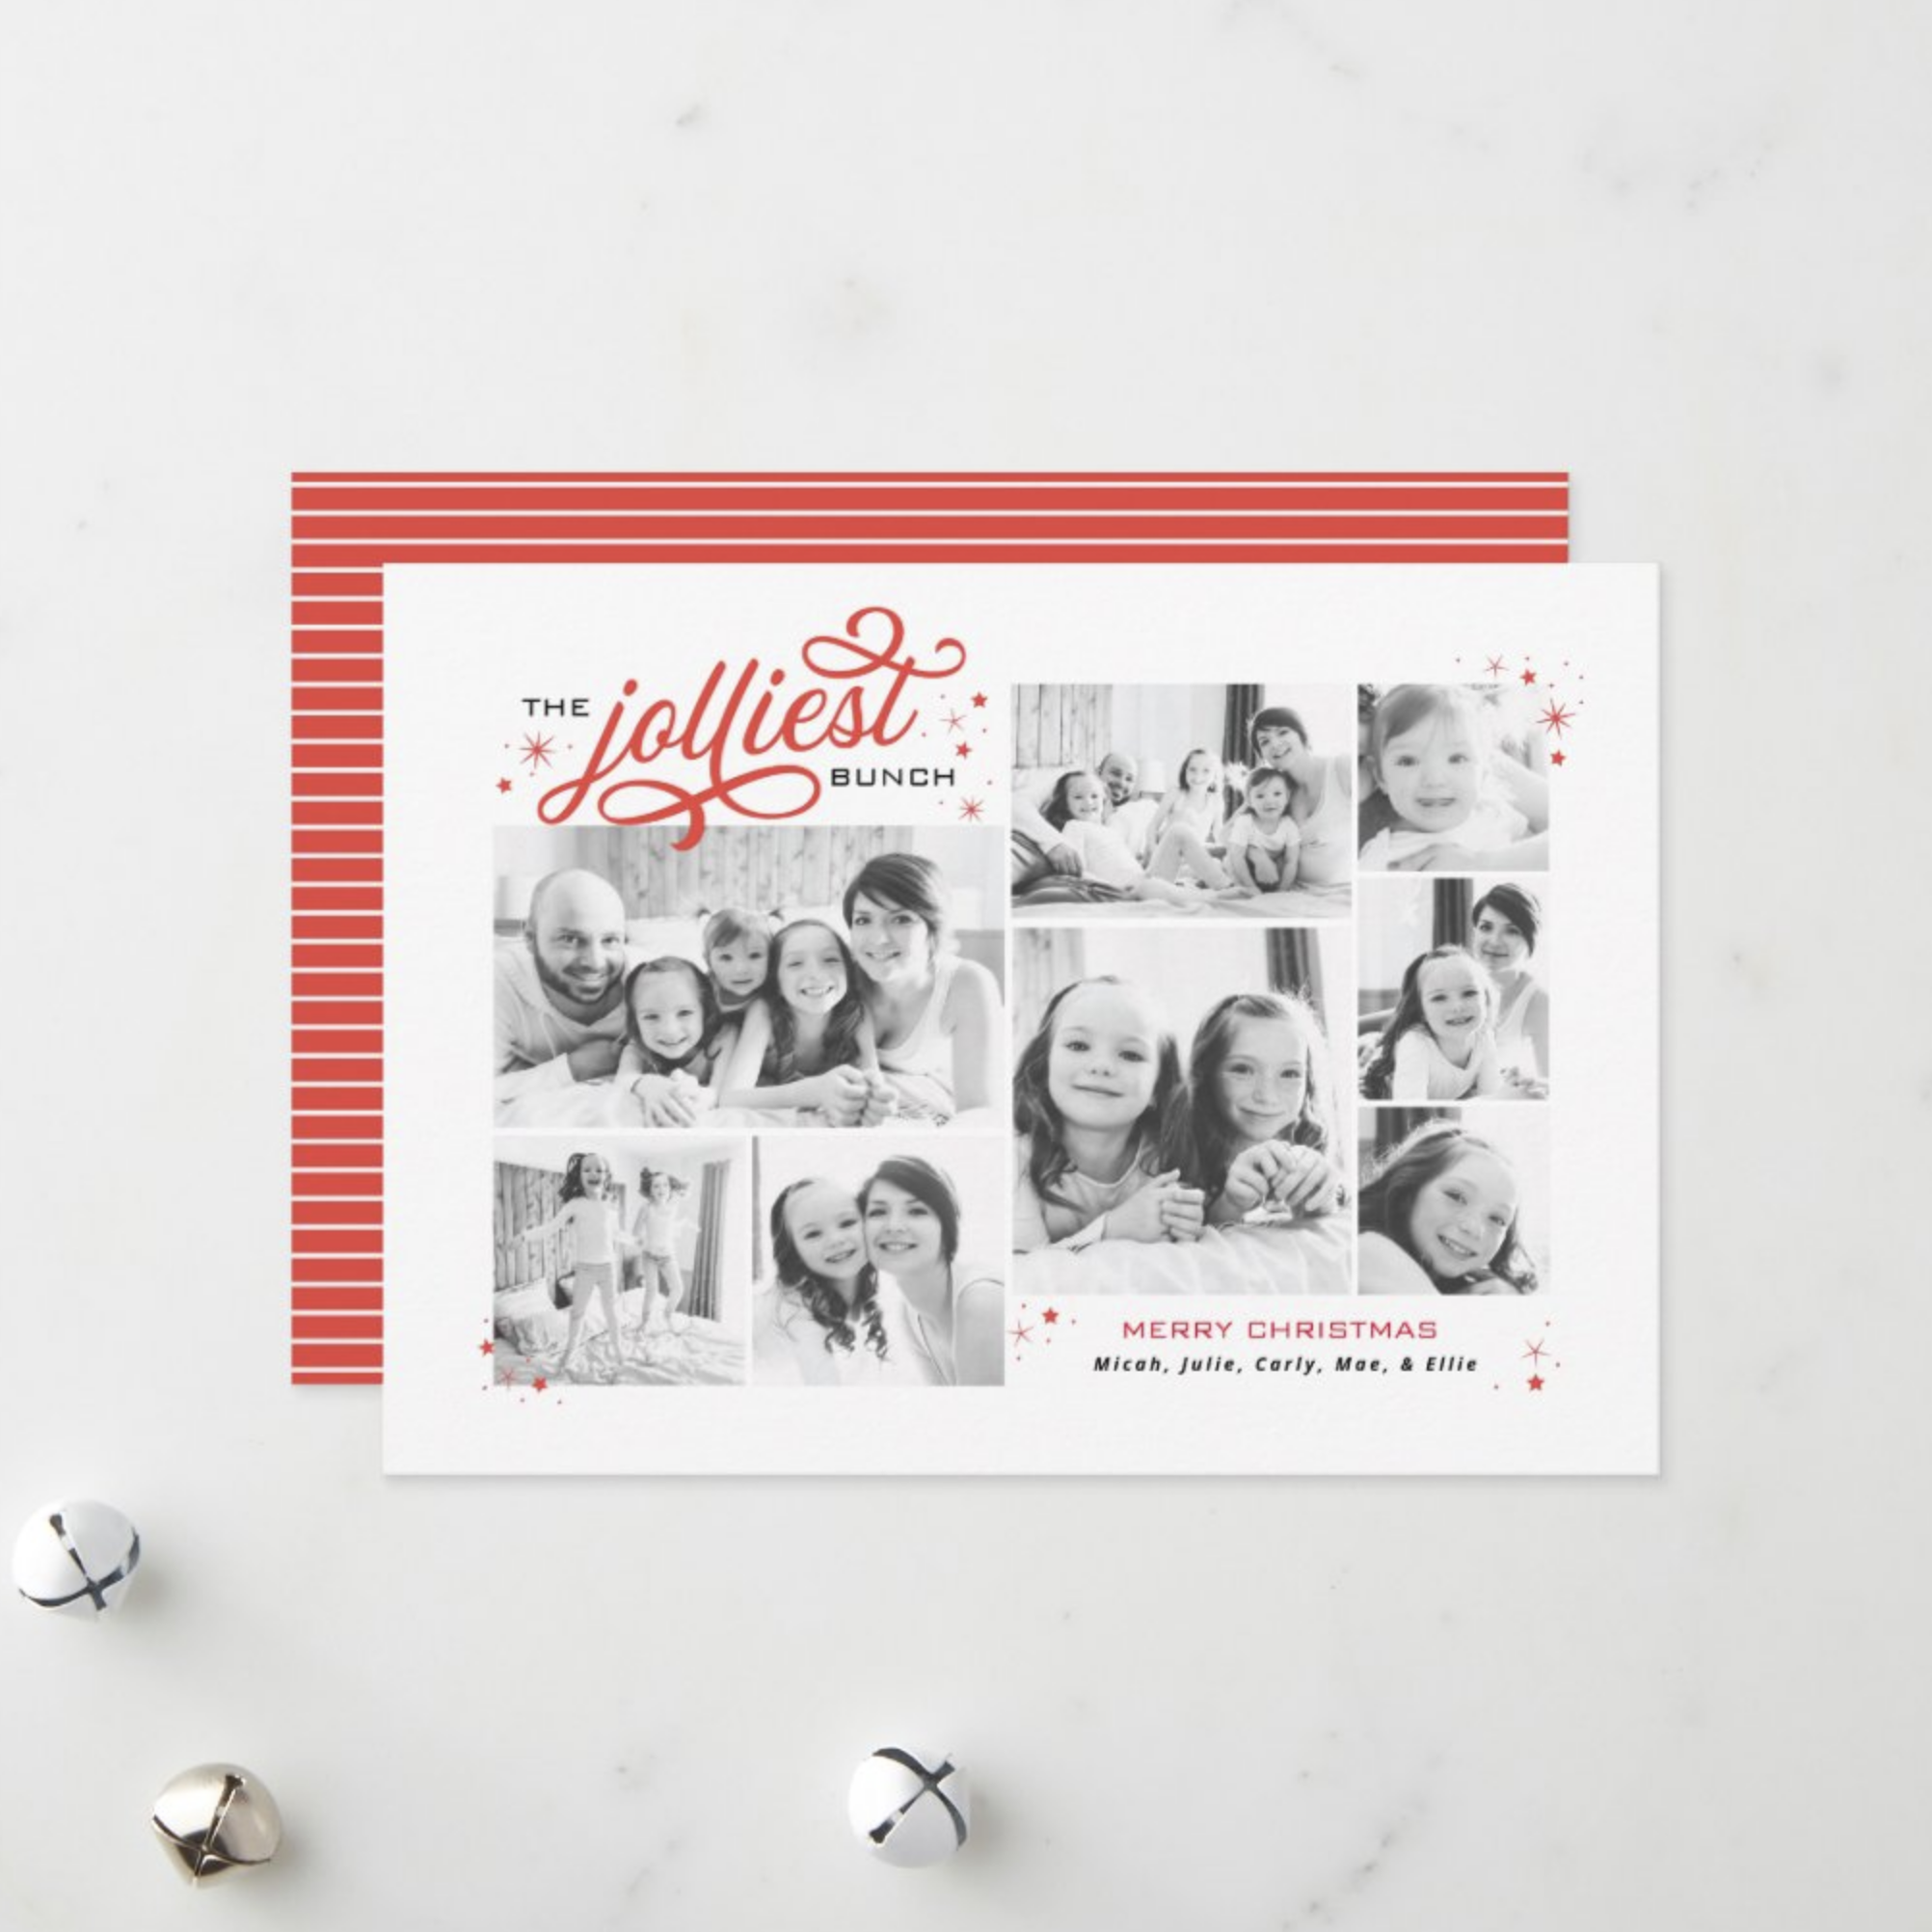 jolliest bunch photo gallery holiday card